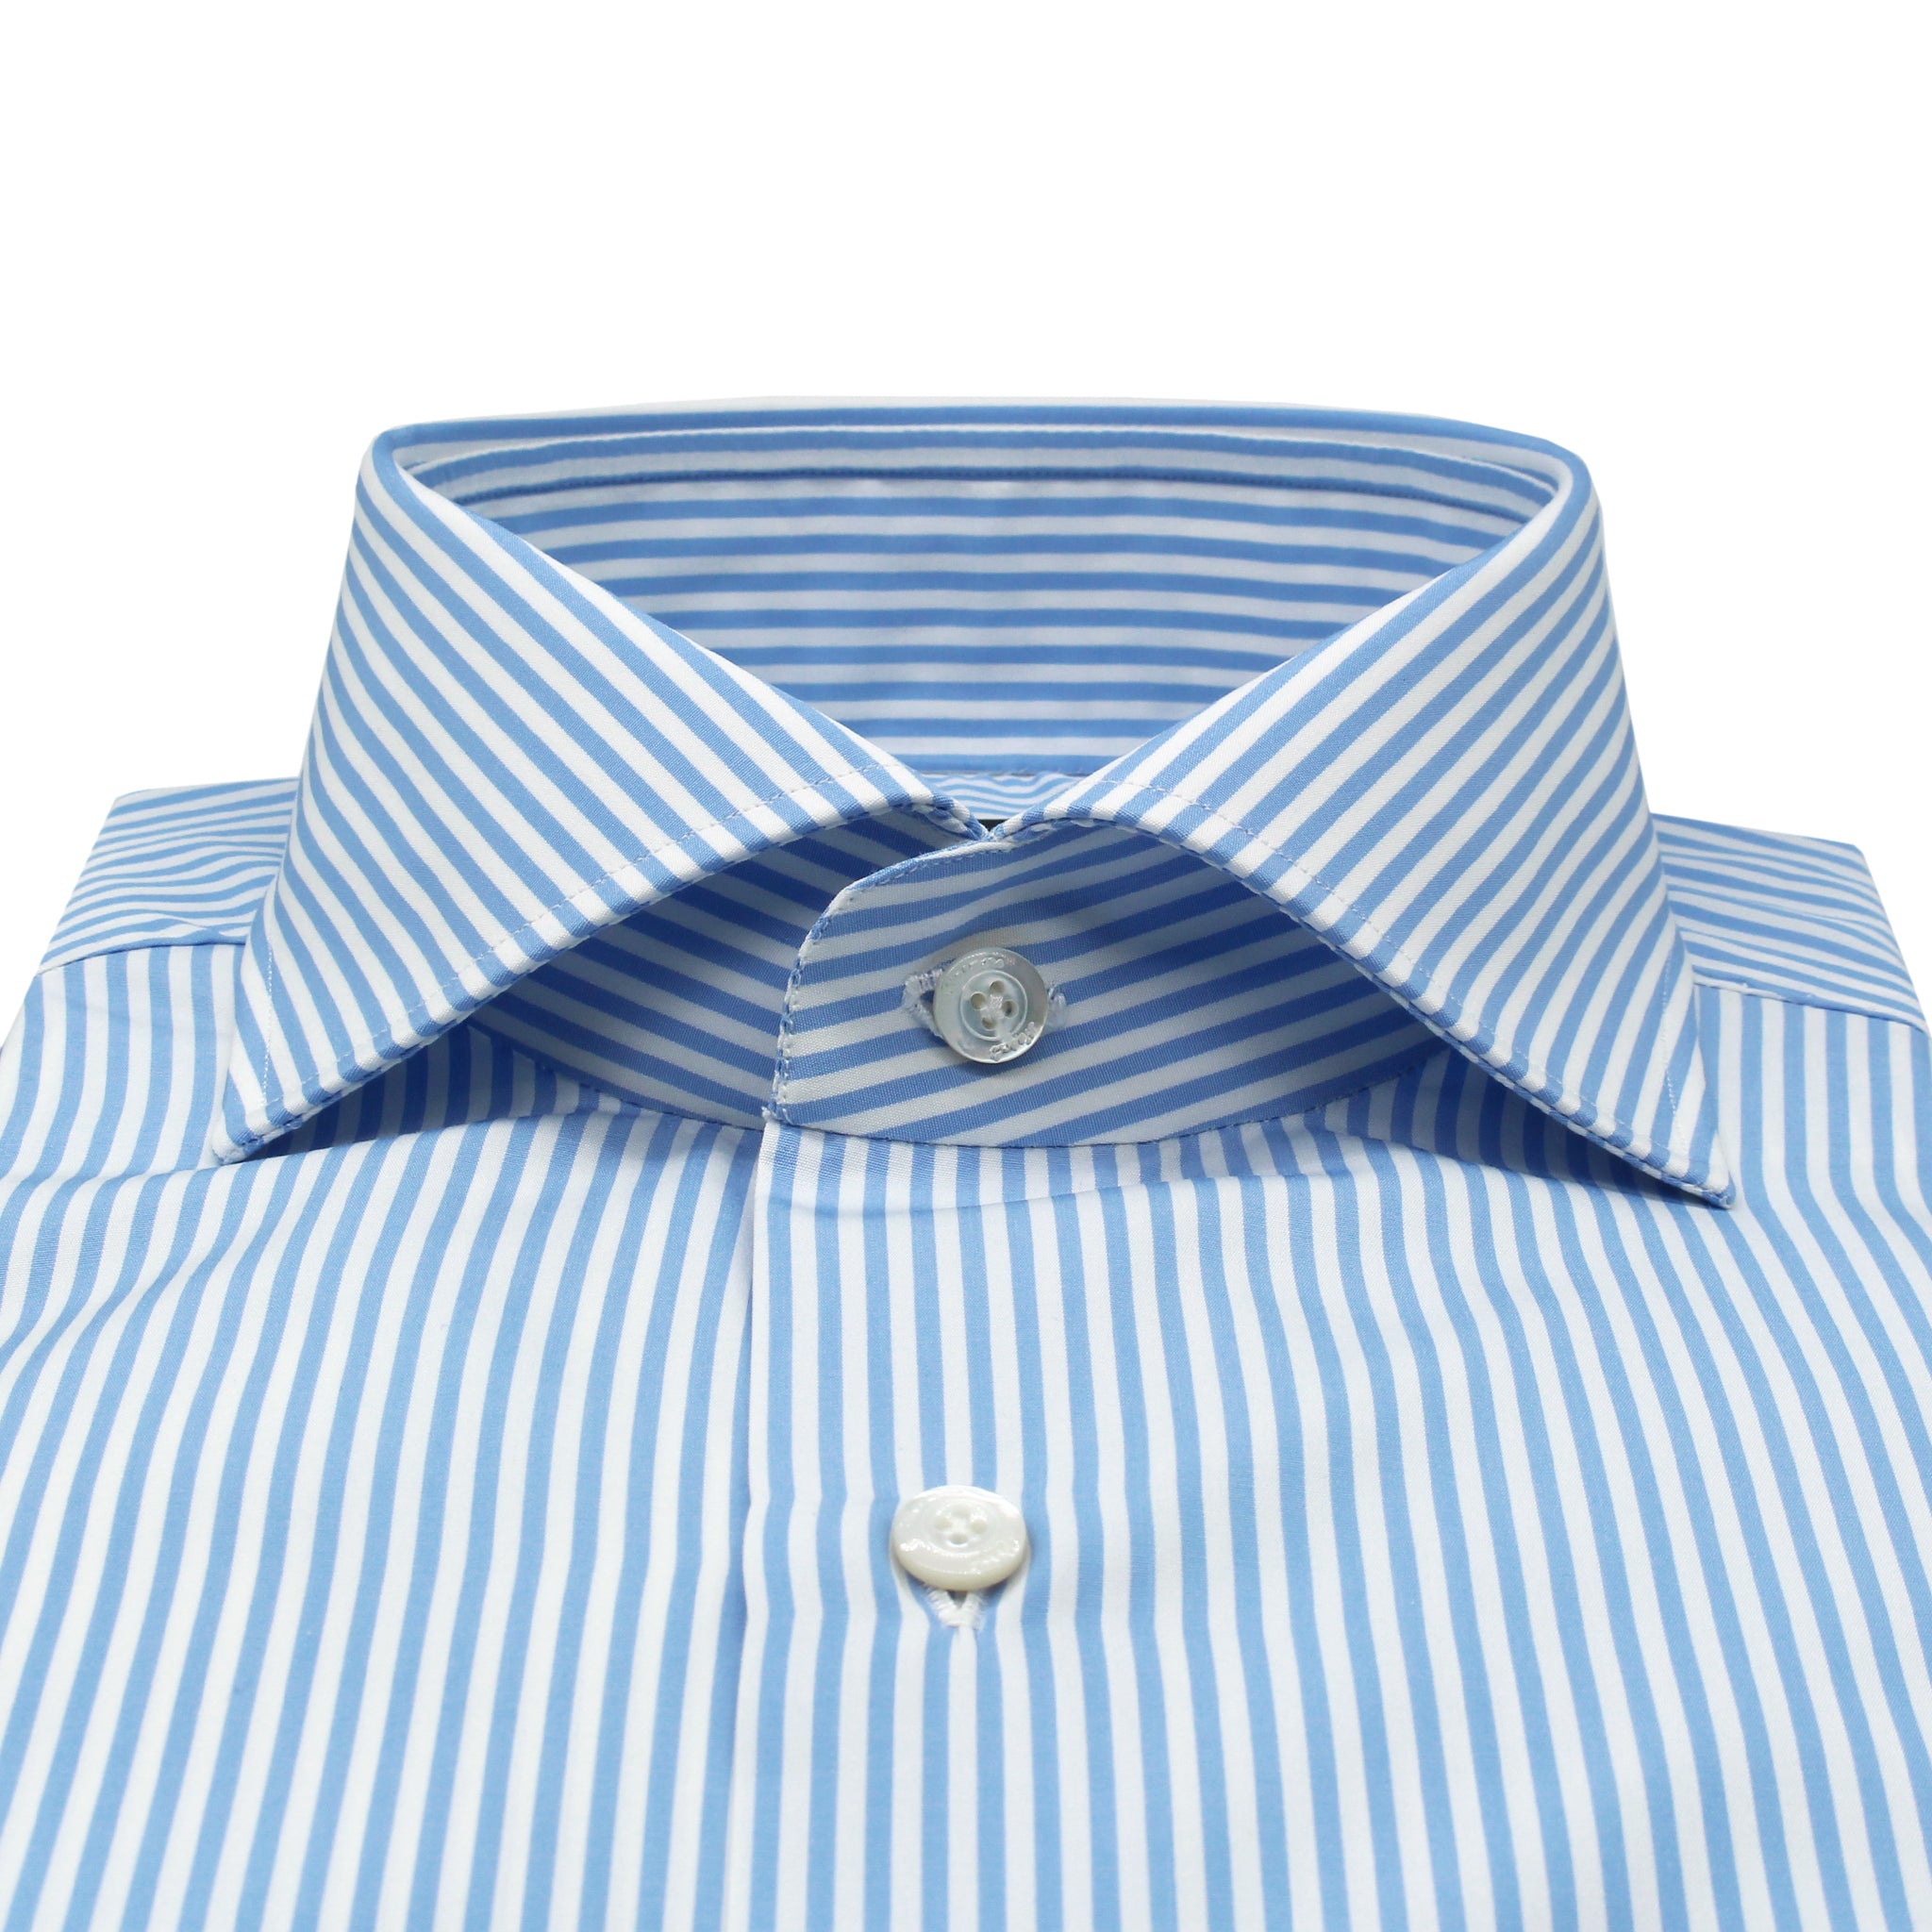 Classic Naples regular fit shirt in light blue striped cotton